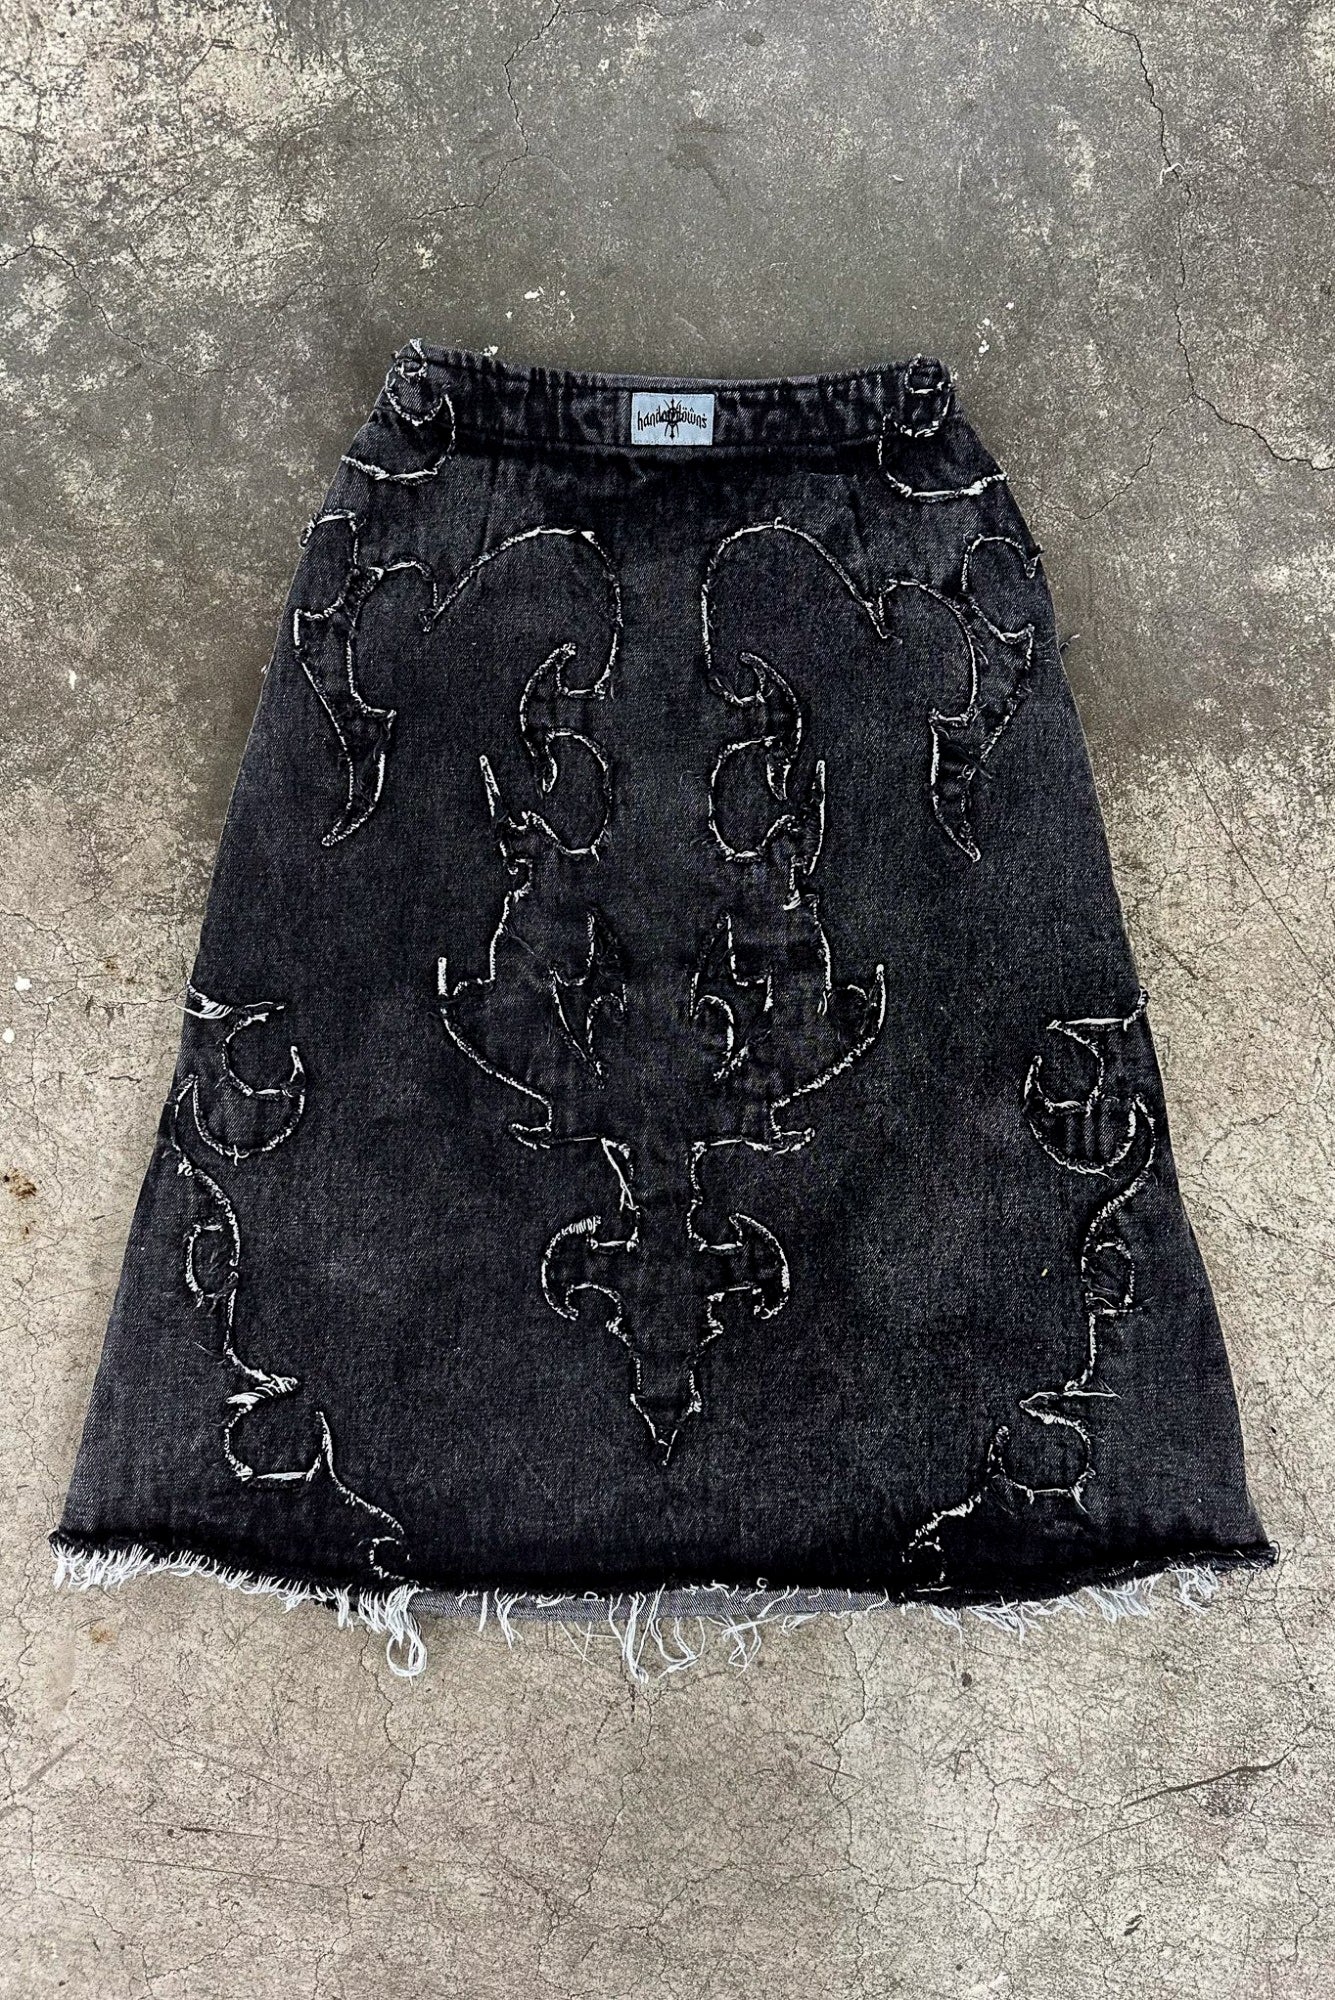 Dynasty Denim Skirt